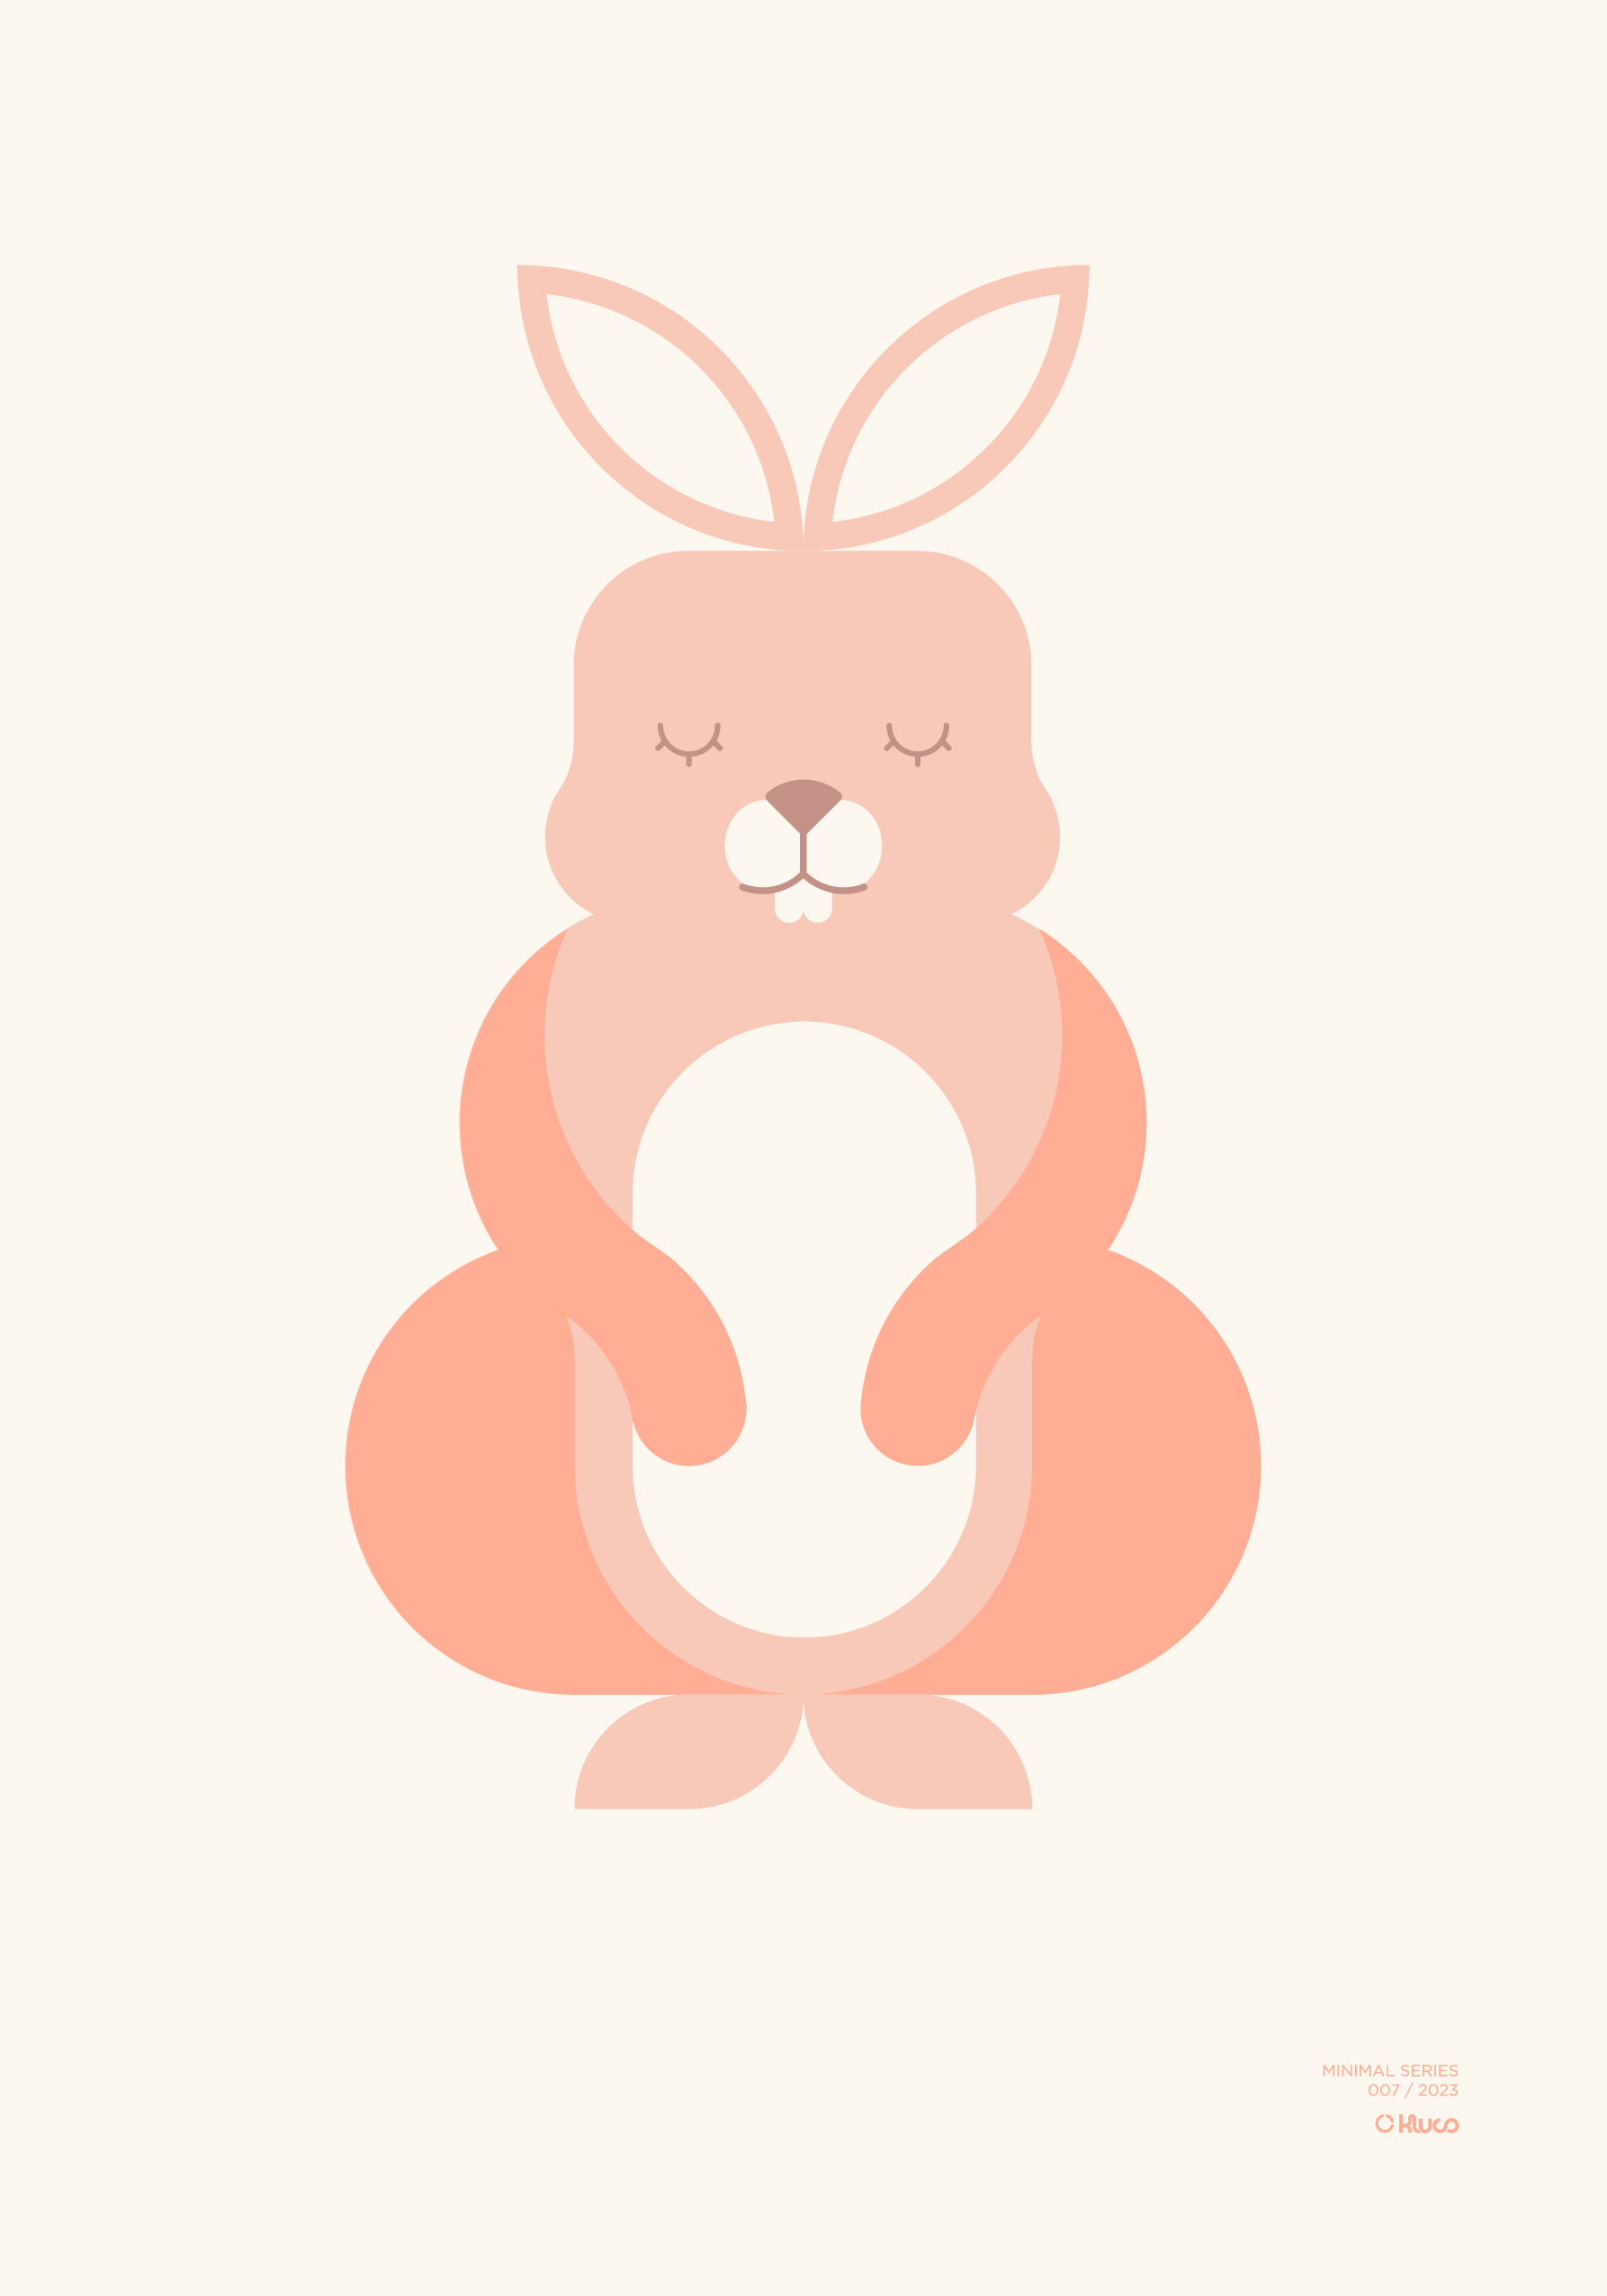 Minimalist-style poster of a rabbit